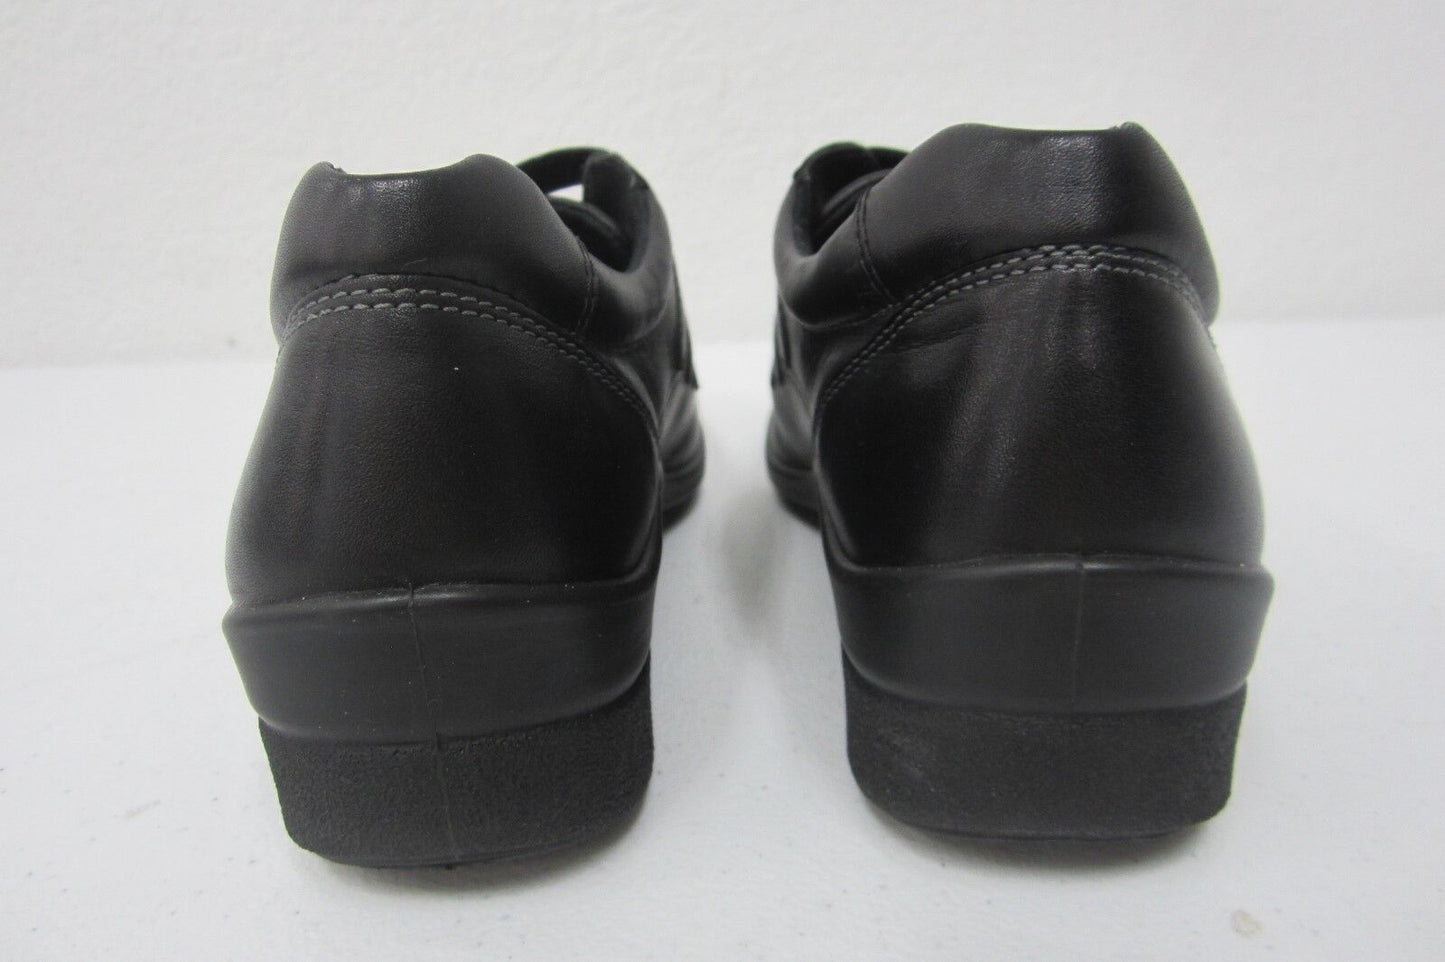 *FLOOR SAMPLE*Ecco Women’s Black Leather 3 Strap Adjustable Wedge Loafers Sz 6.5